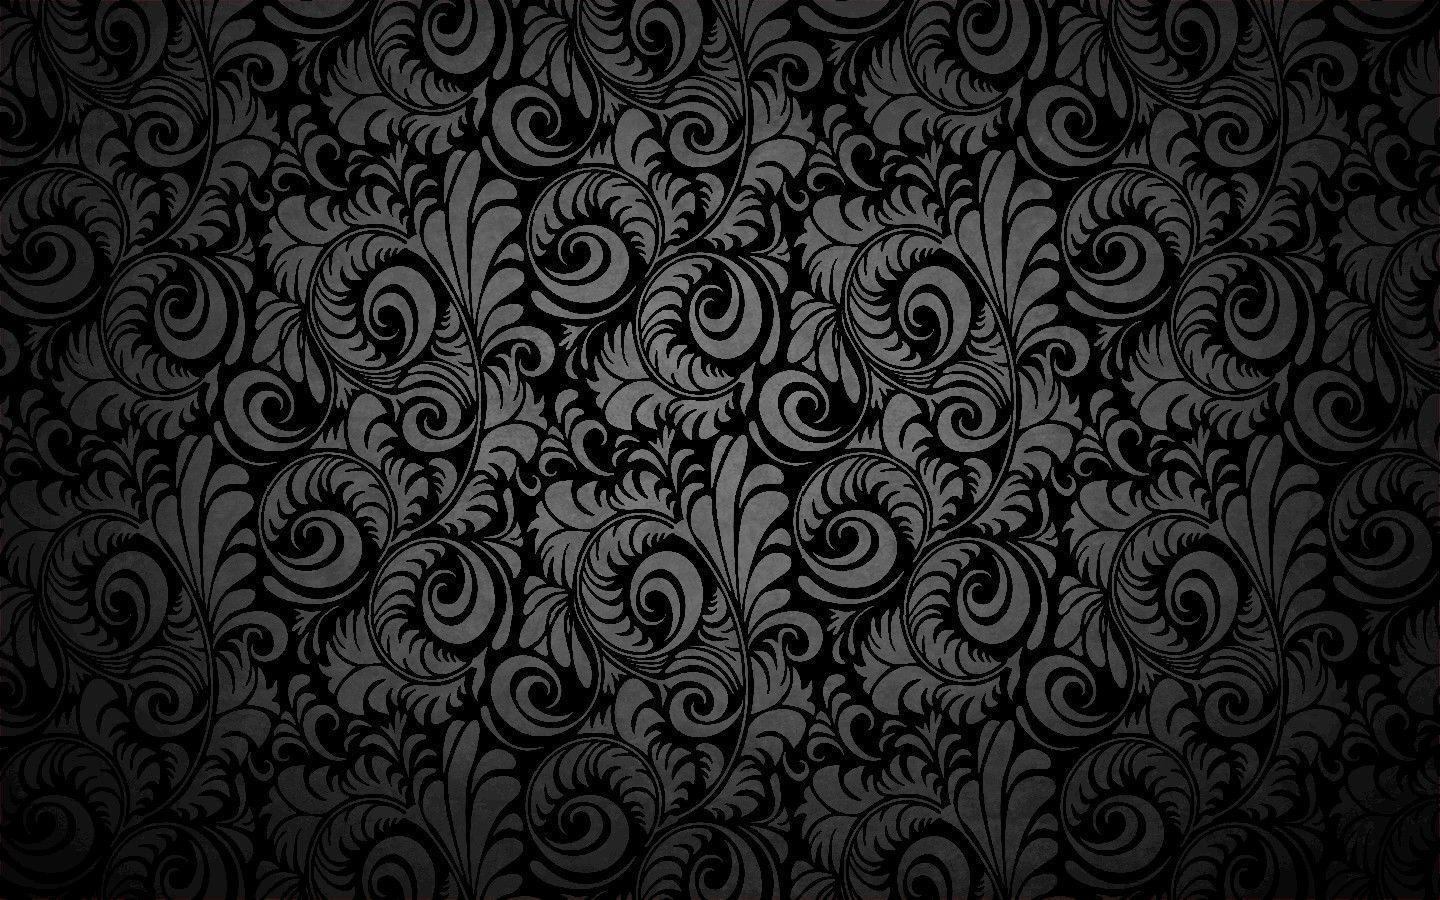 Patterns Wallpaper, Gallery of 40 Patterns Background, Wallpaper